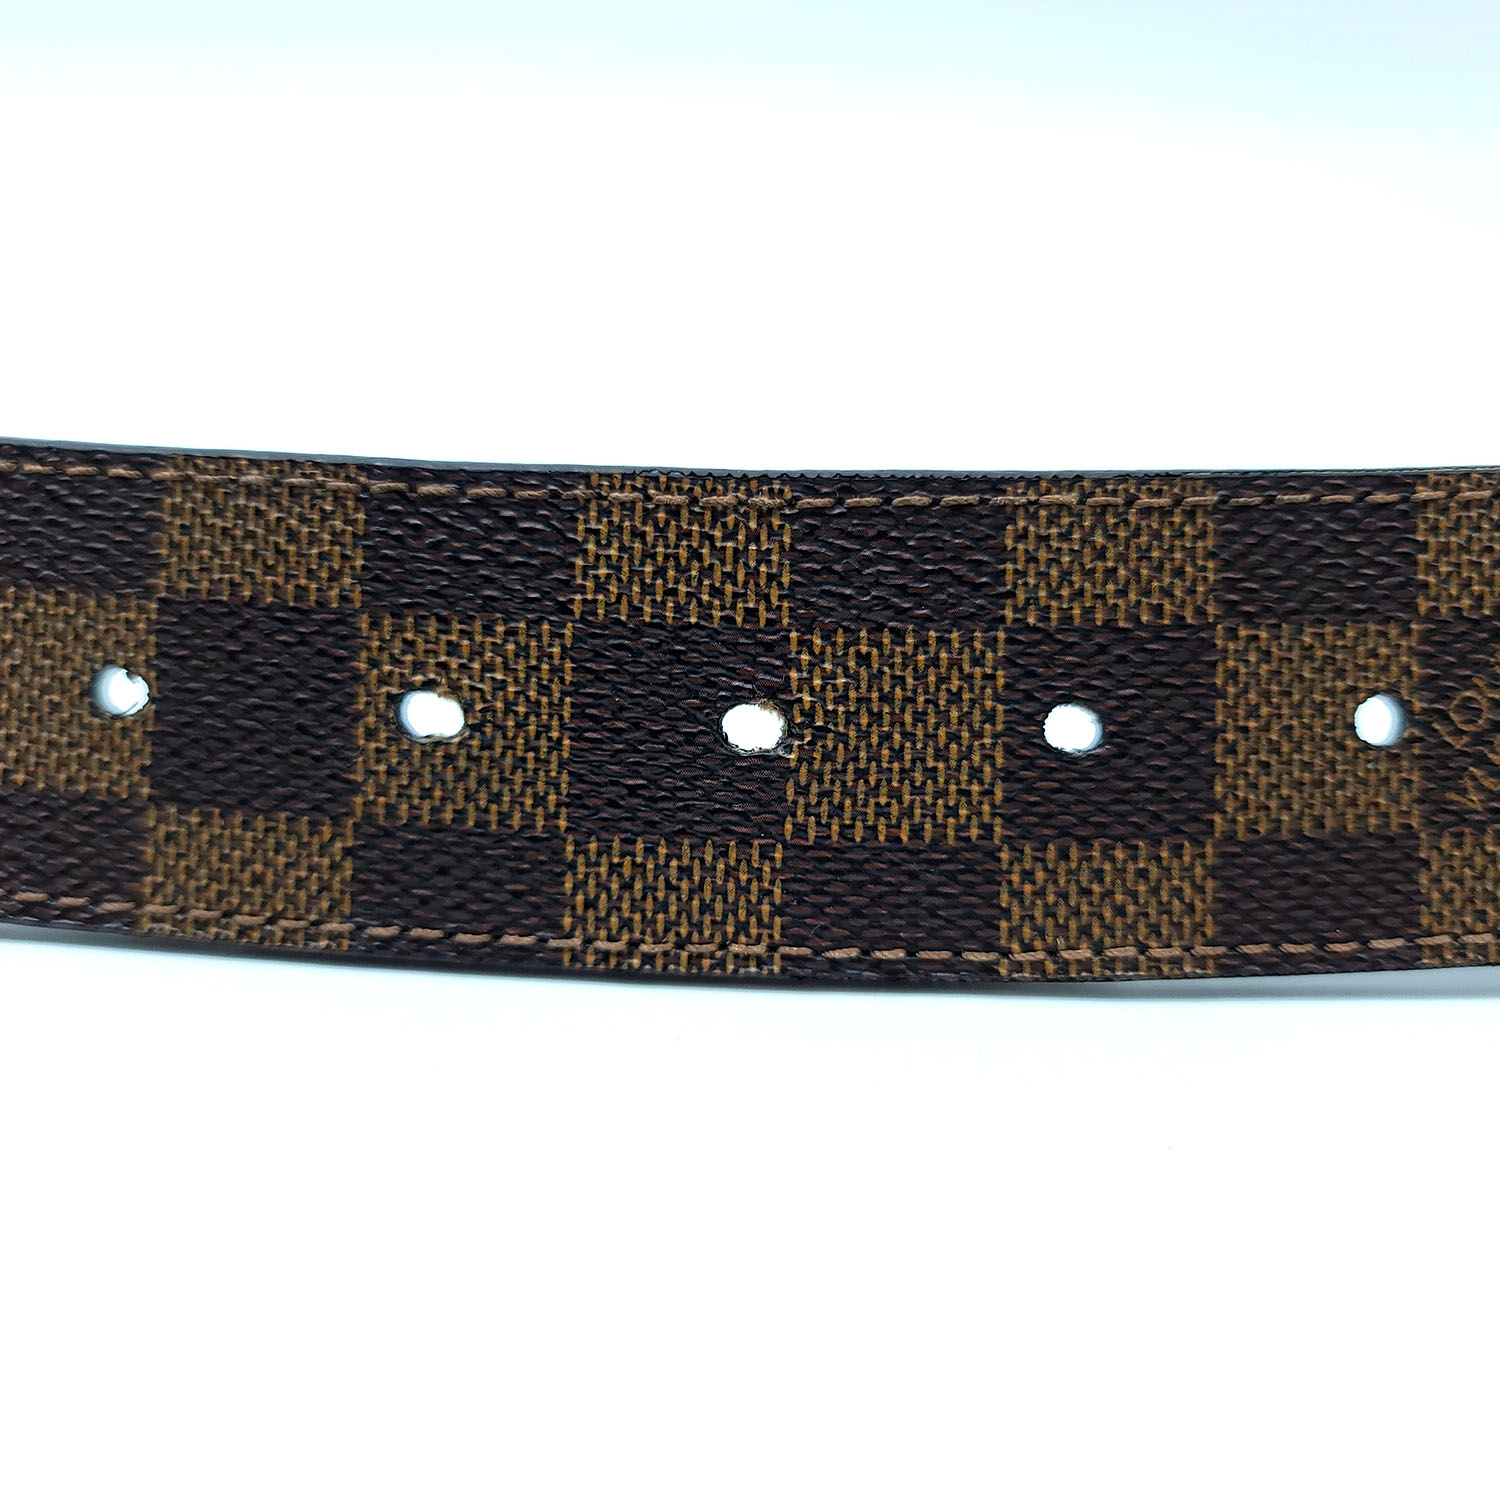 Louis vuitton belt size 100/40 in damier ebene